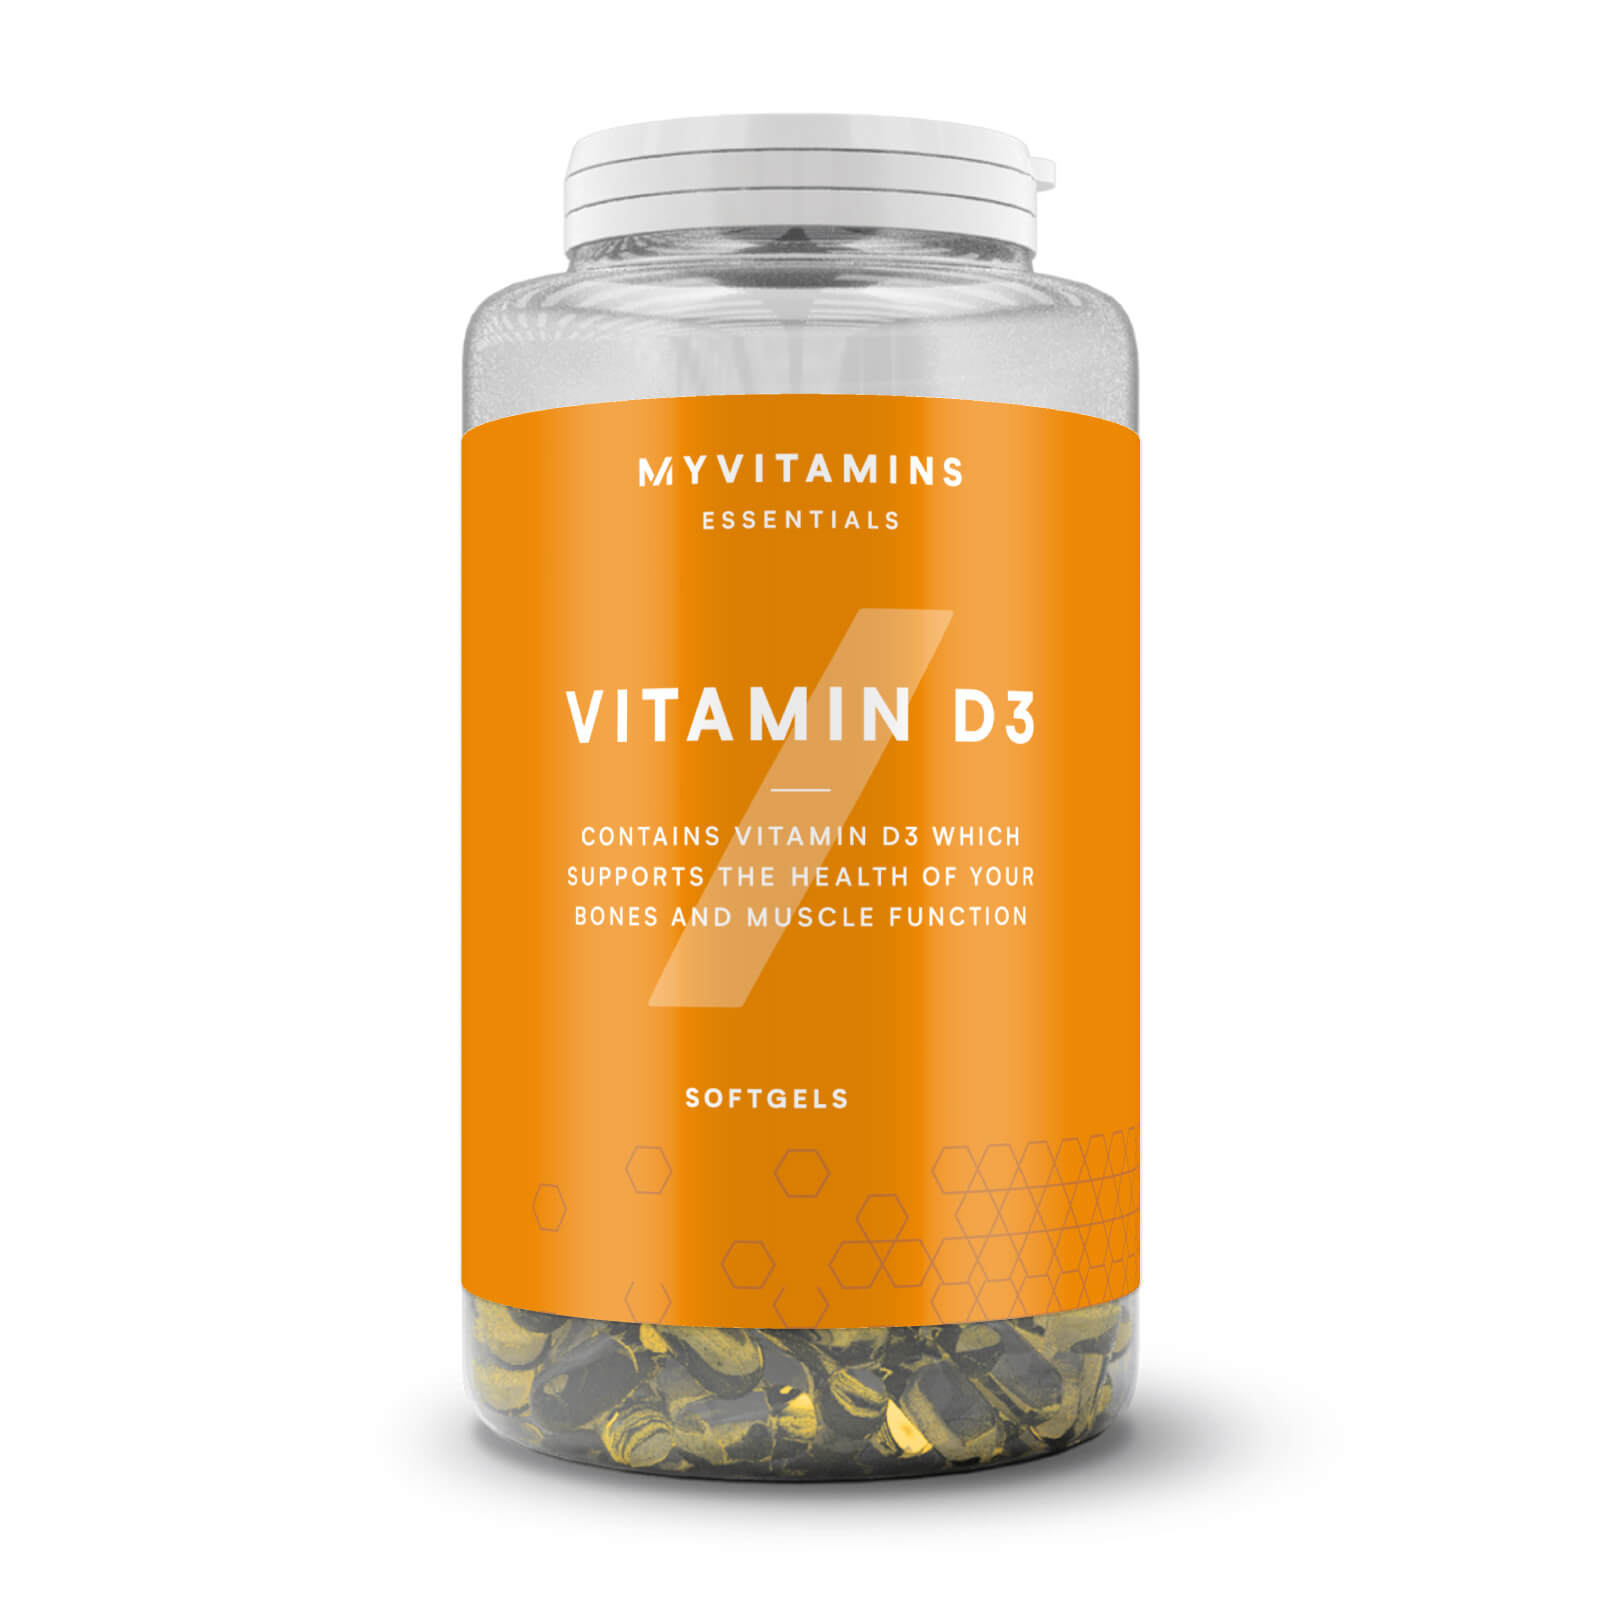 Vitamina D3 em Cápsulas - 30softgels - Vegan